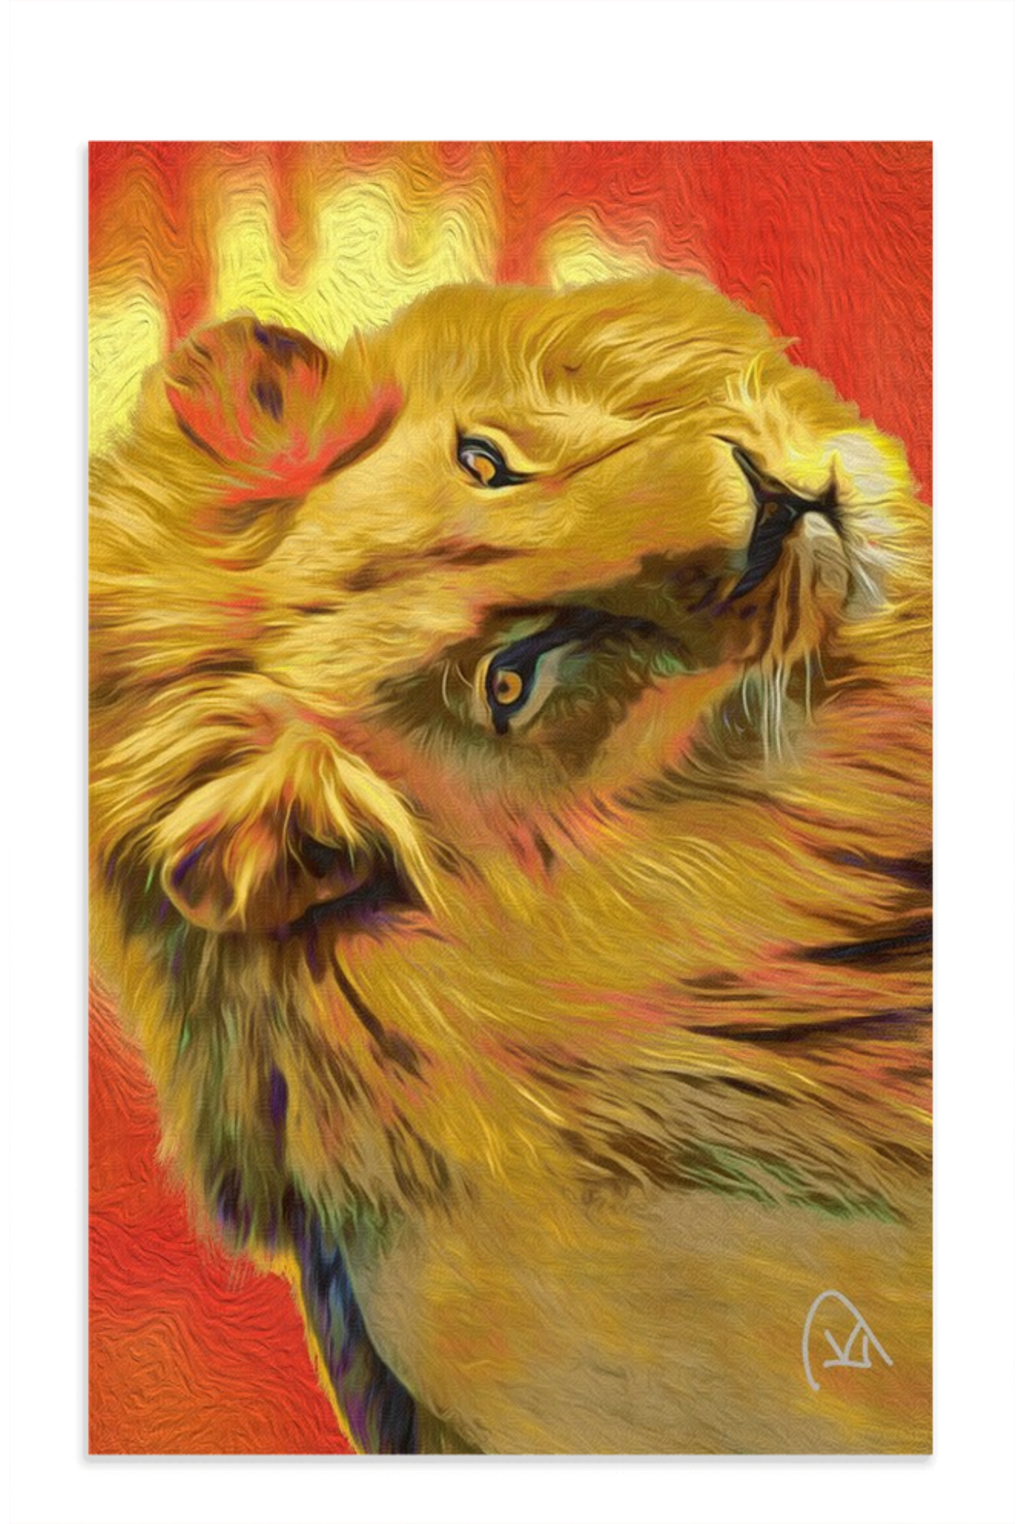 Lion King Dish Towel Lion King Decor